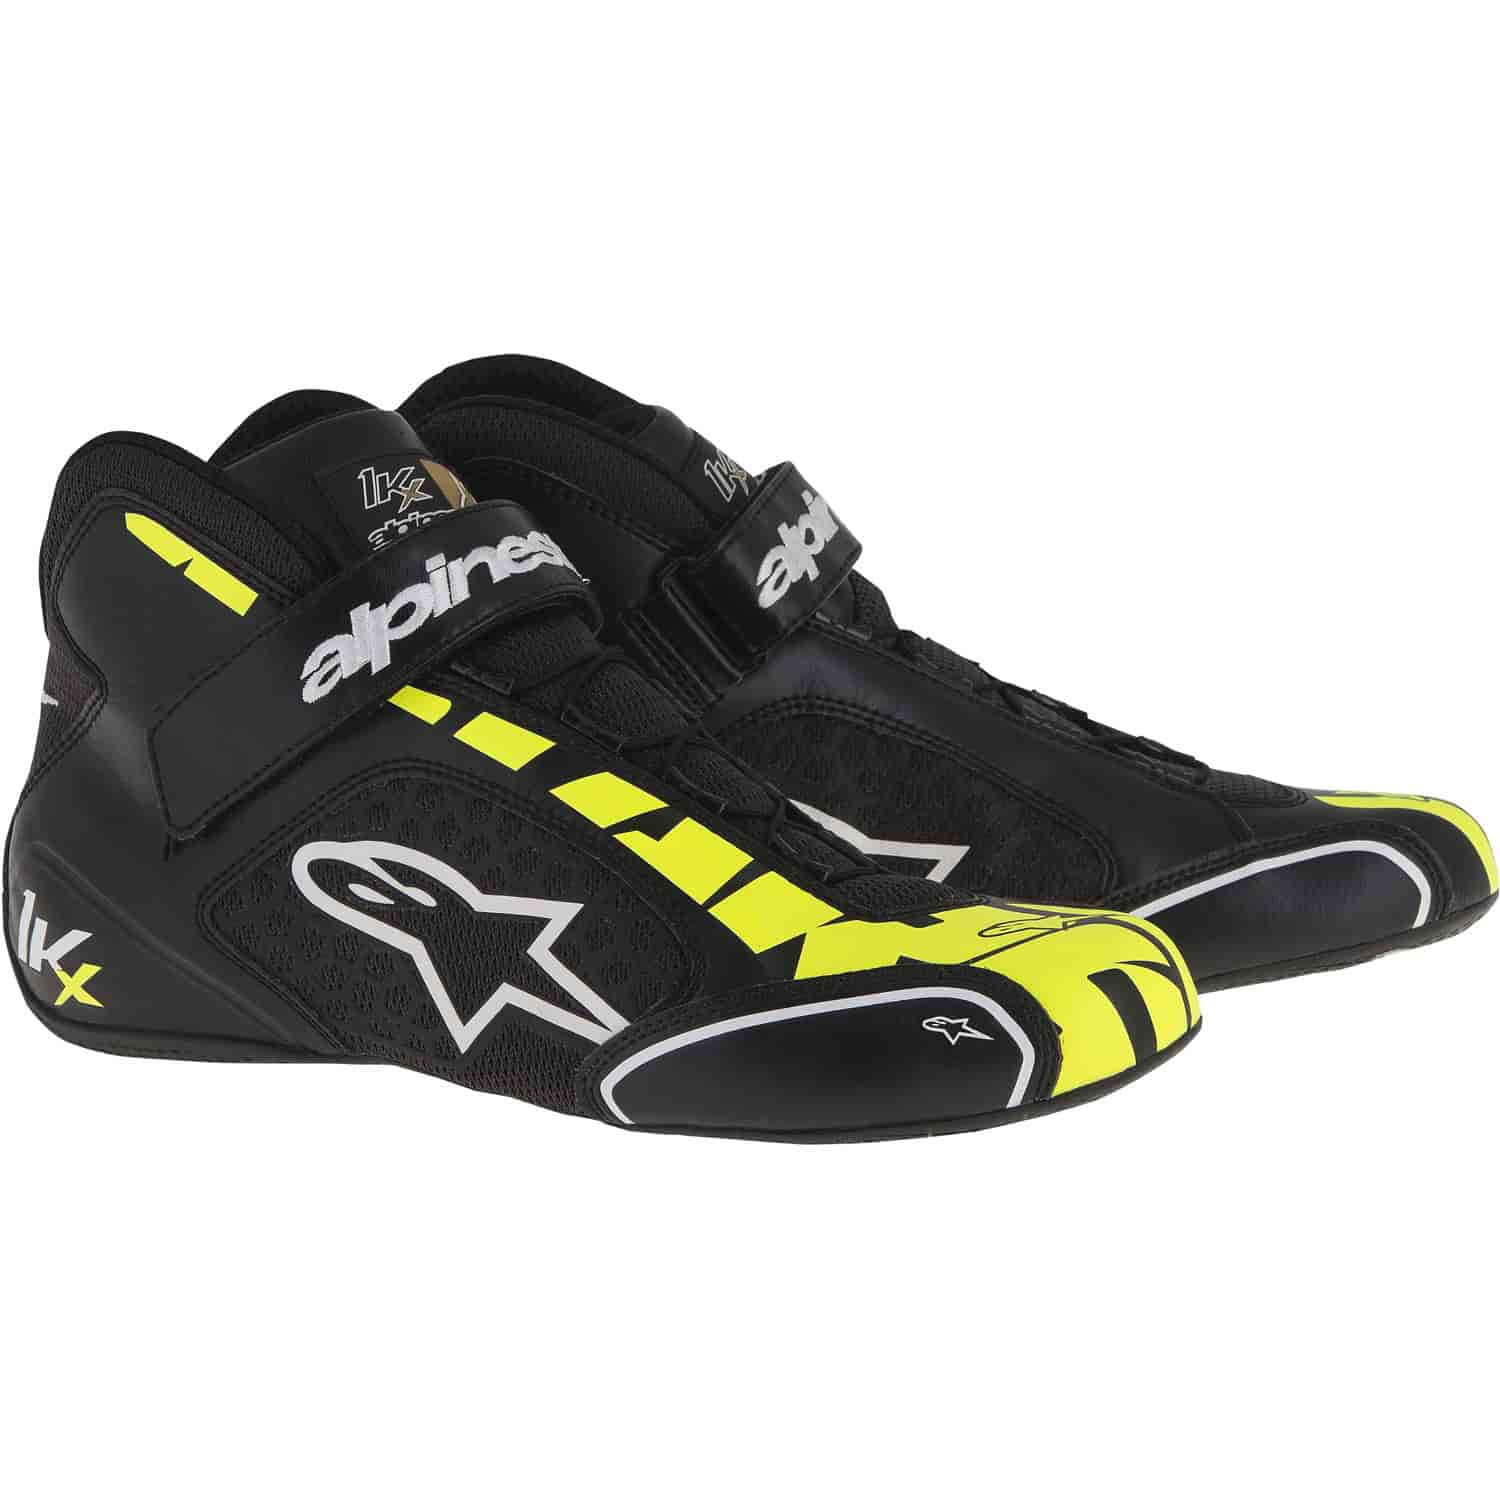 Tech 1-KX Shoes Black/Yellow Fluorescent